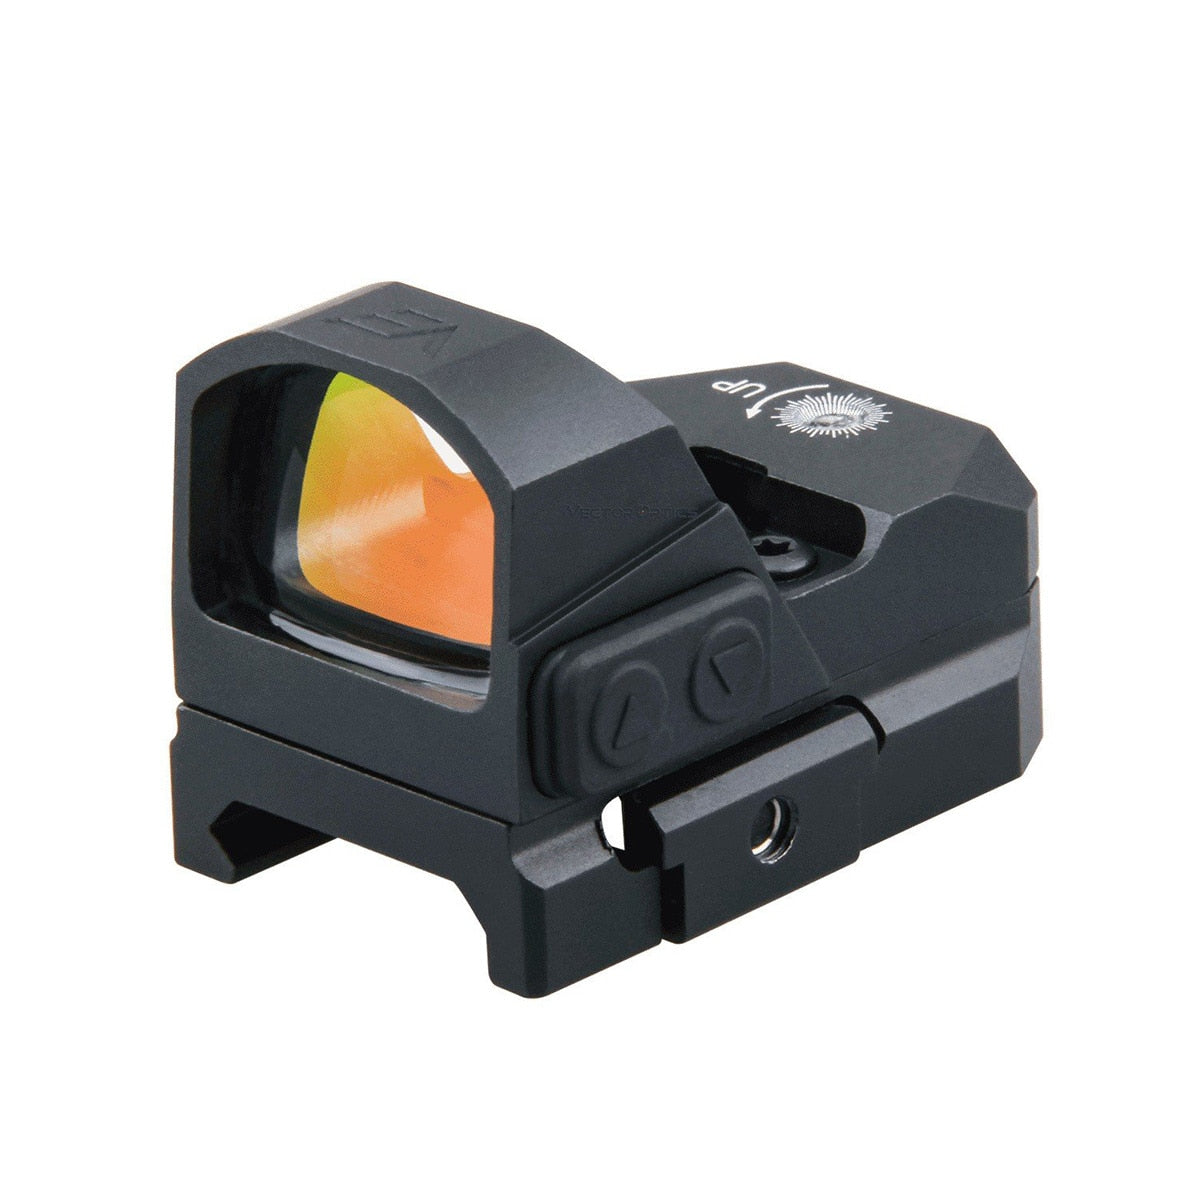 Vector Optics Frenzy 1x17x24 Red Dot Scope Pistol Handgun Sight IPX6 Water Proof Fit 21mm Picatinny GLOCK 17 19 9mm AR15 M4 AK